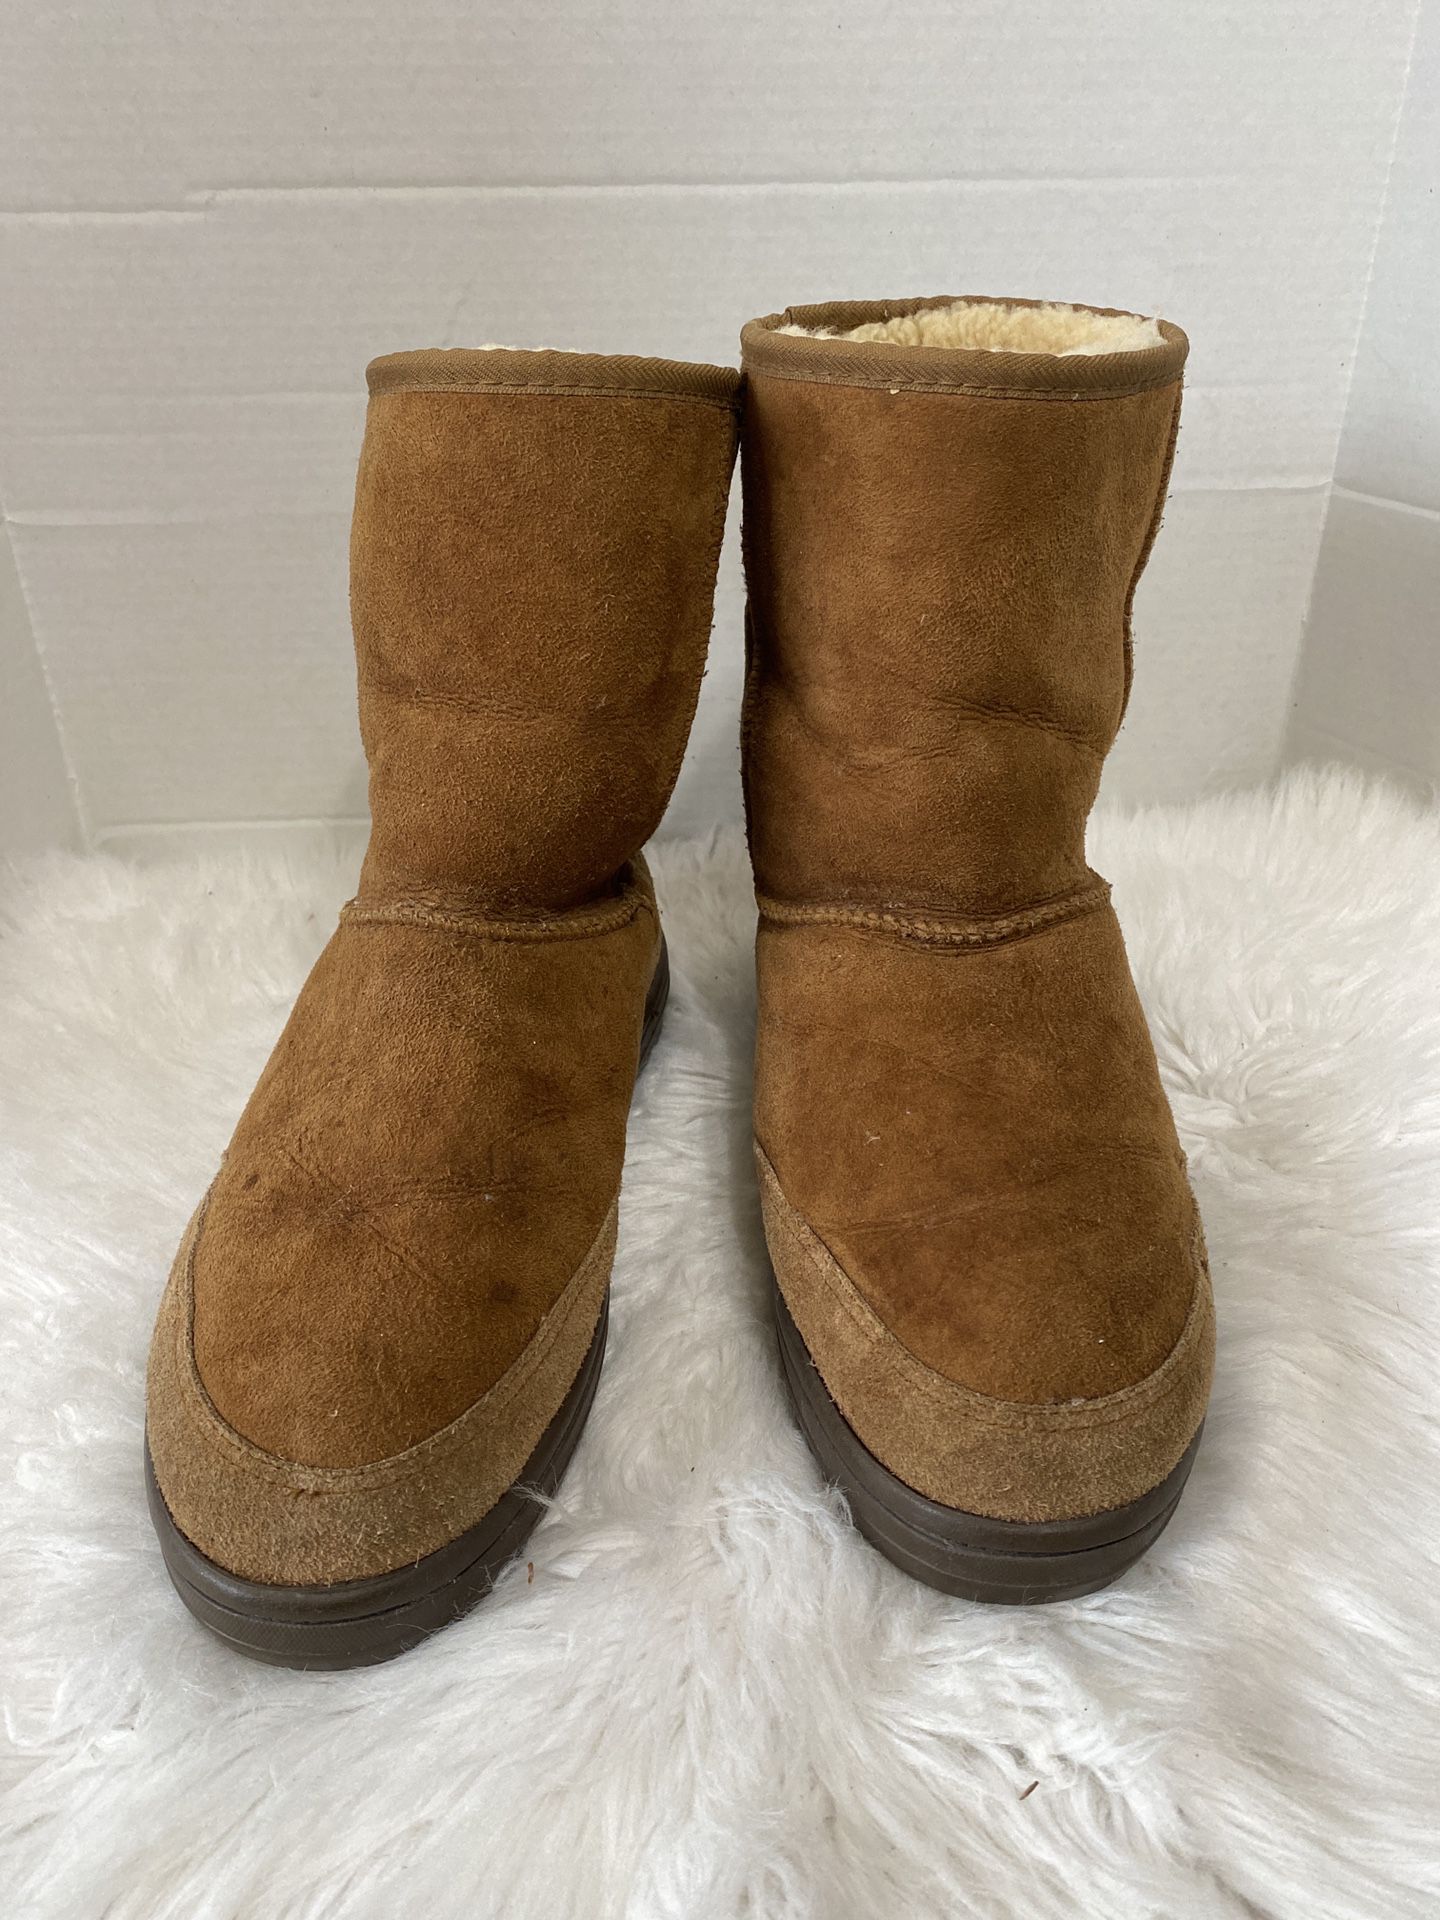 UGG Australia Men's Short Boots 5220 Chestnut Brown with Sheepskin Size 9 US